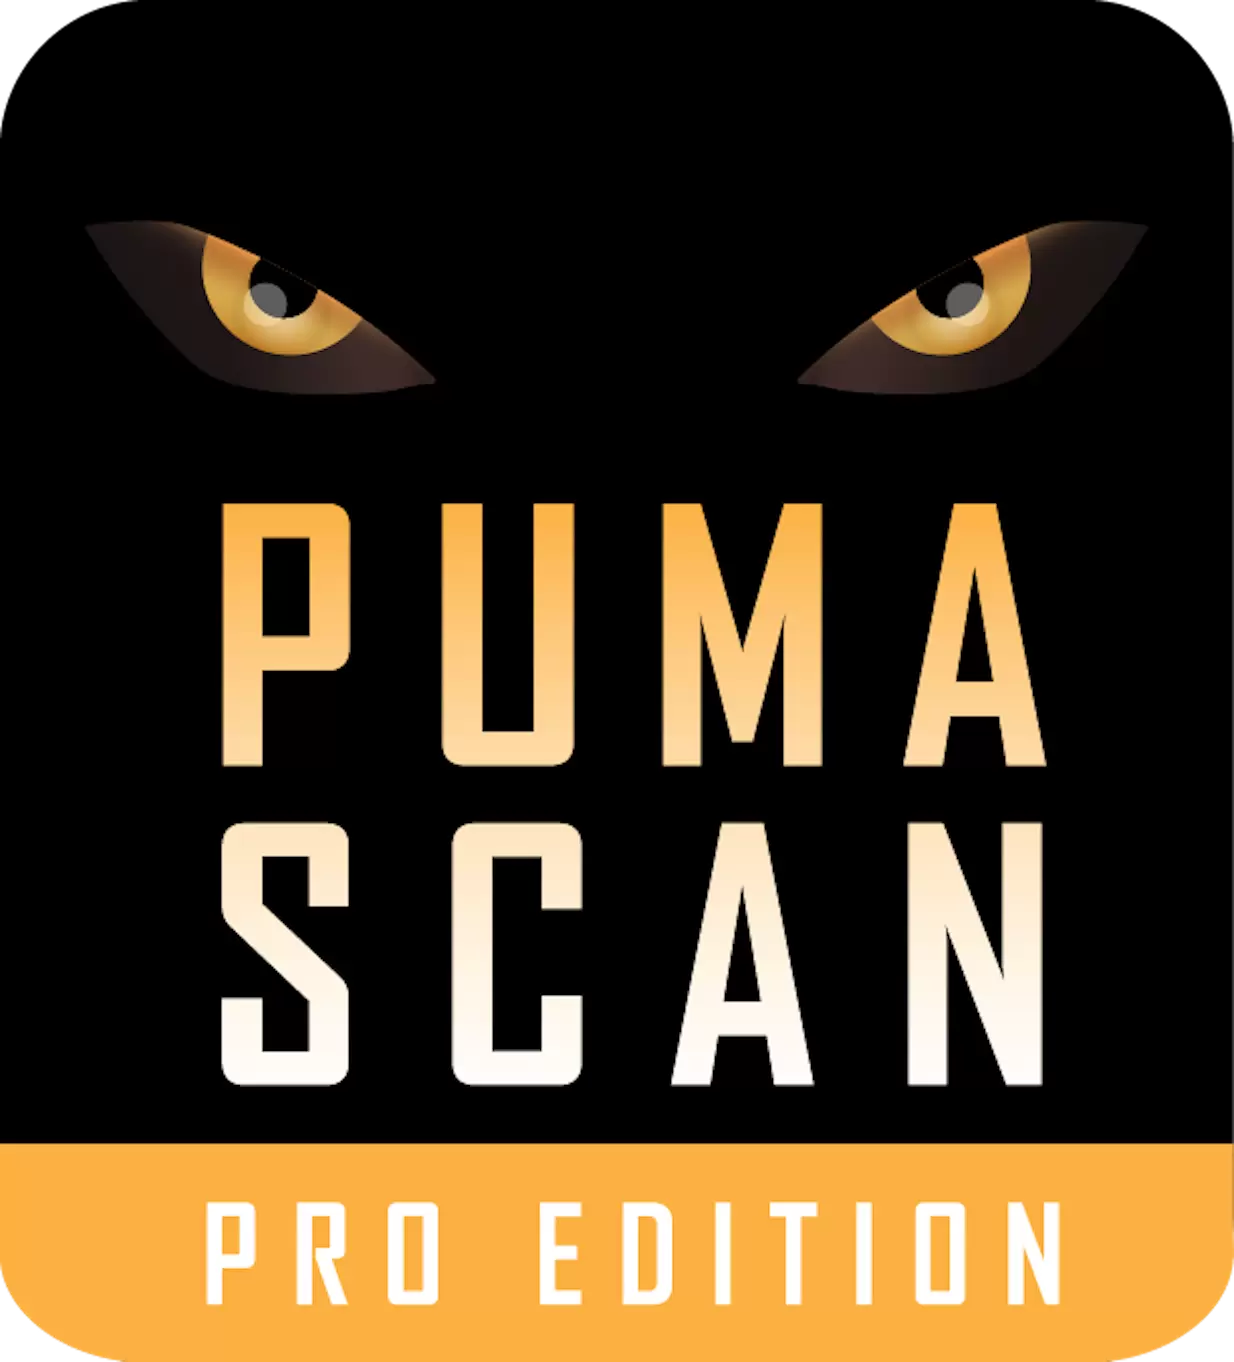 Puma Scan Professional 1.5.1005 Extension for Visual Studio Code